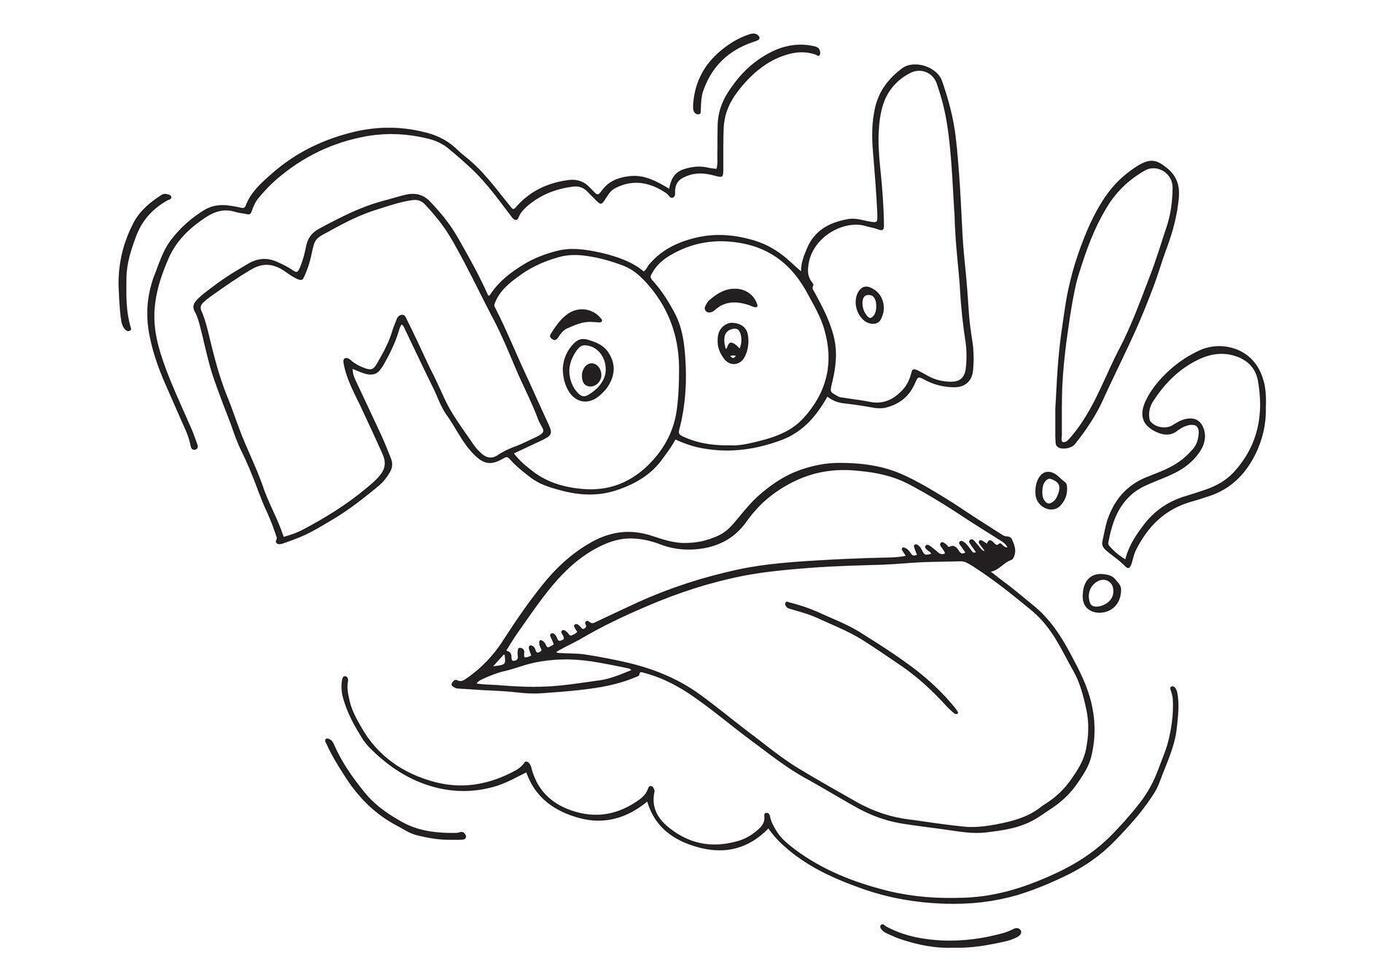 tong met vraag Mark symbool teken. tekenfilm emoji uitdrukken verveling en vermoeidheid. vector